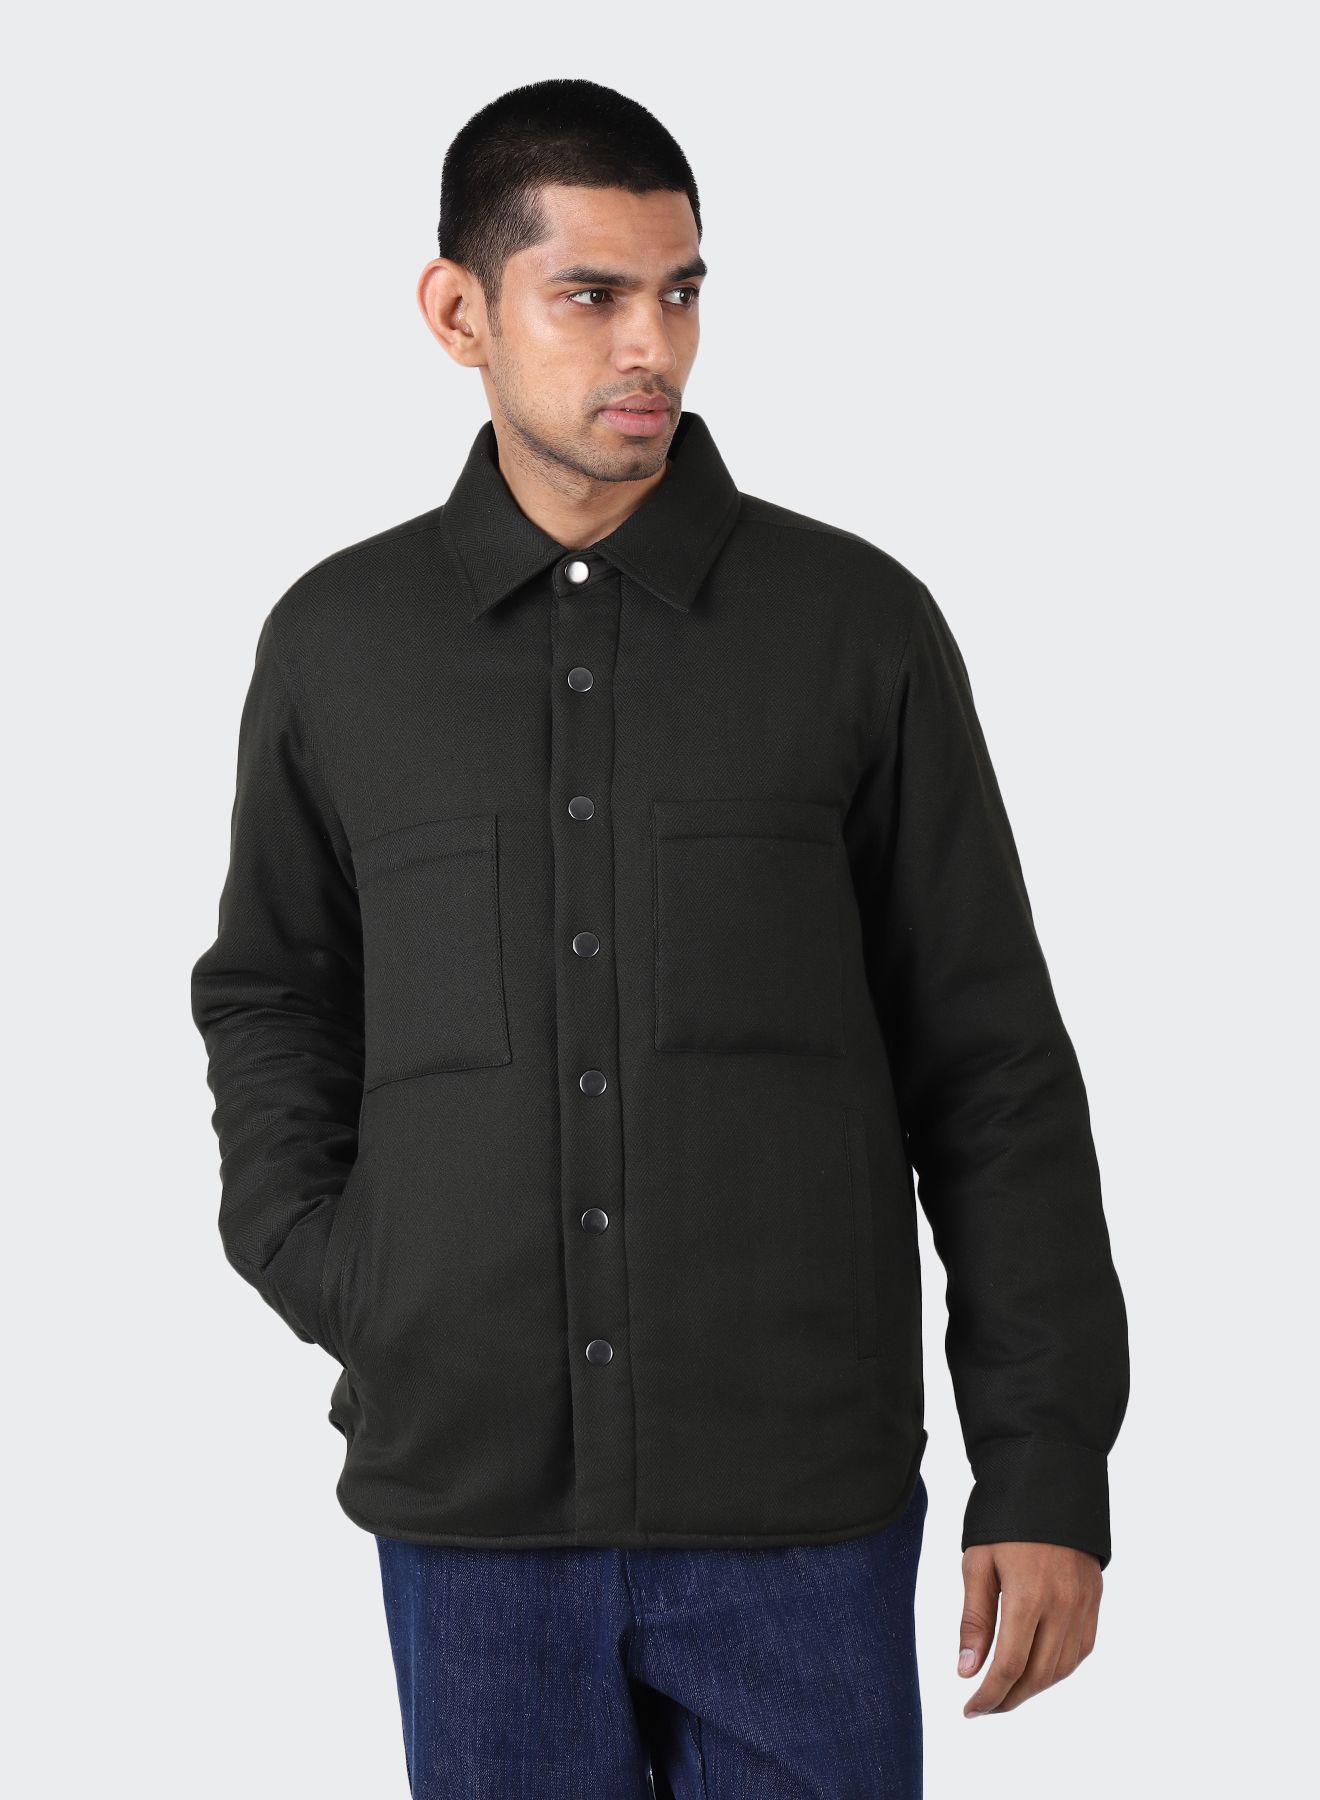 Kardo Chintan Short Sleeve Shirt BP69 Tiger Print Black — Aggregate Supply